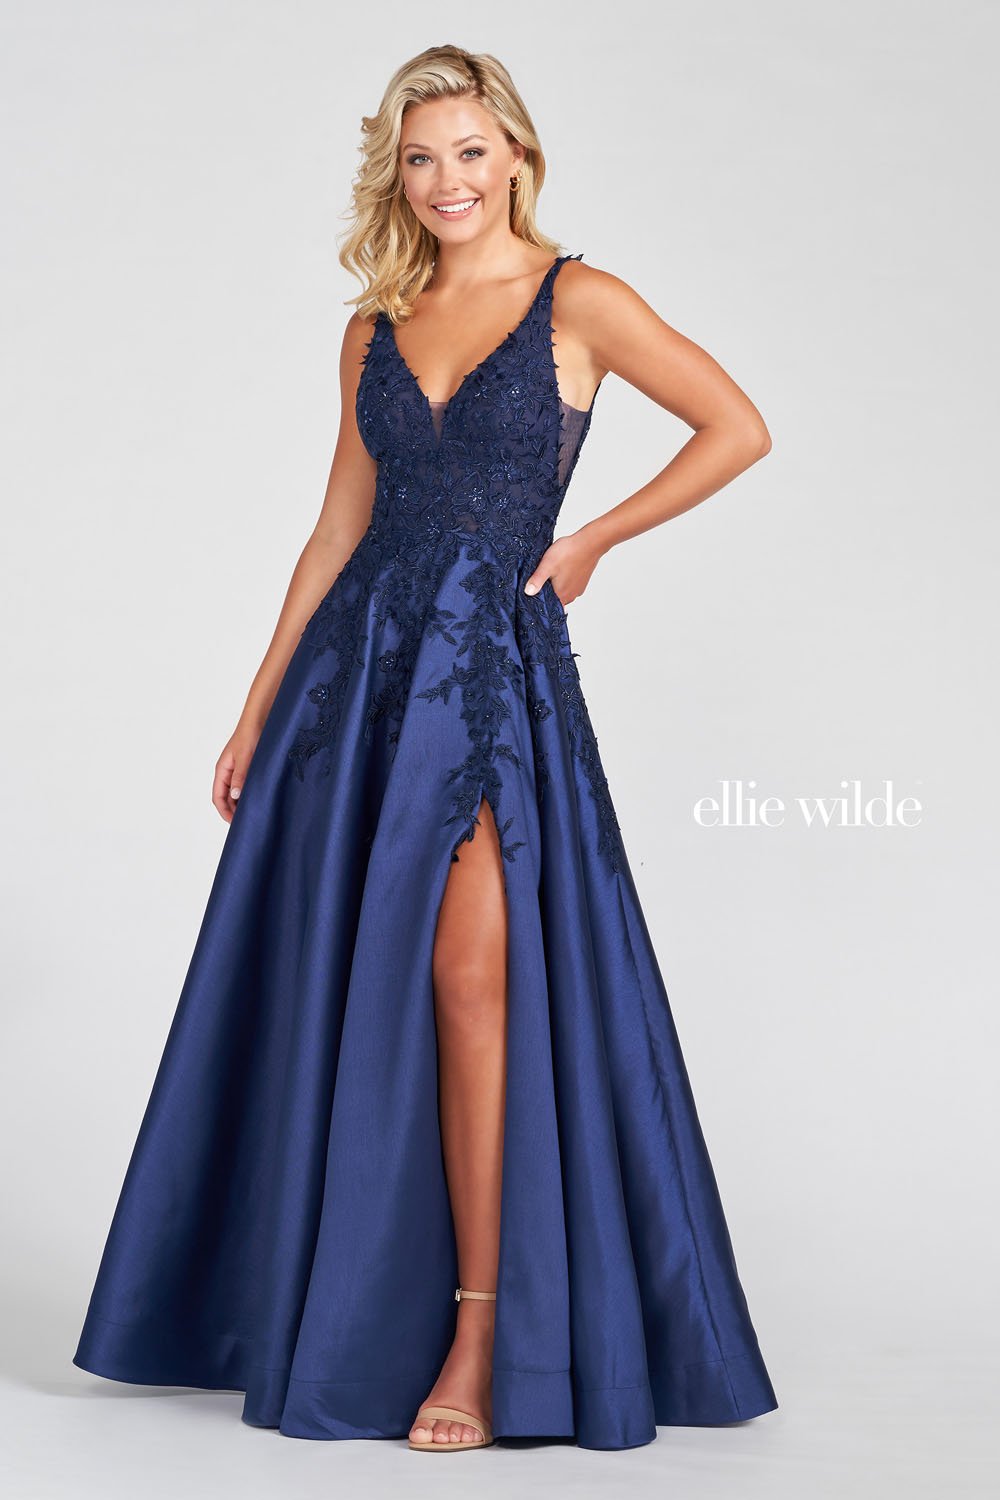 Ellie Wilde Navy Blue EW122074 Prom Dress Image.  Navy Blue formal dress.